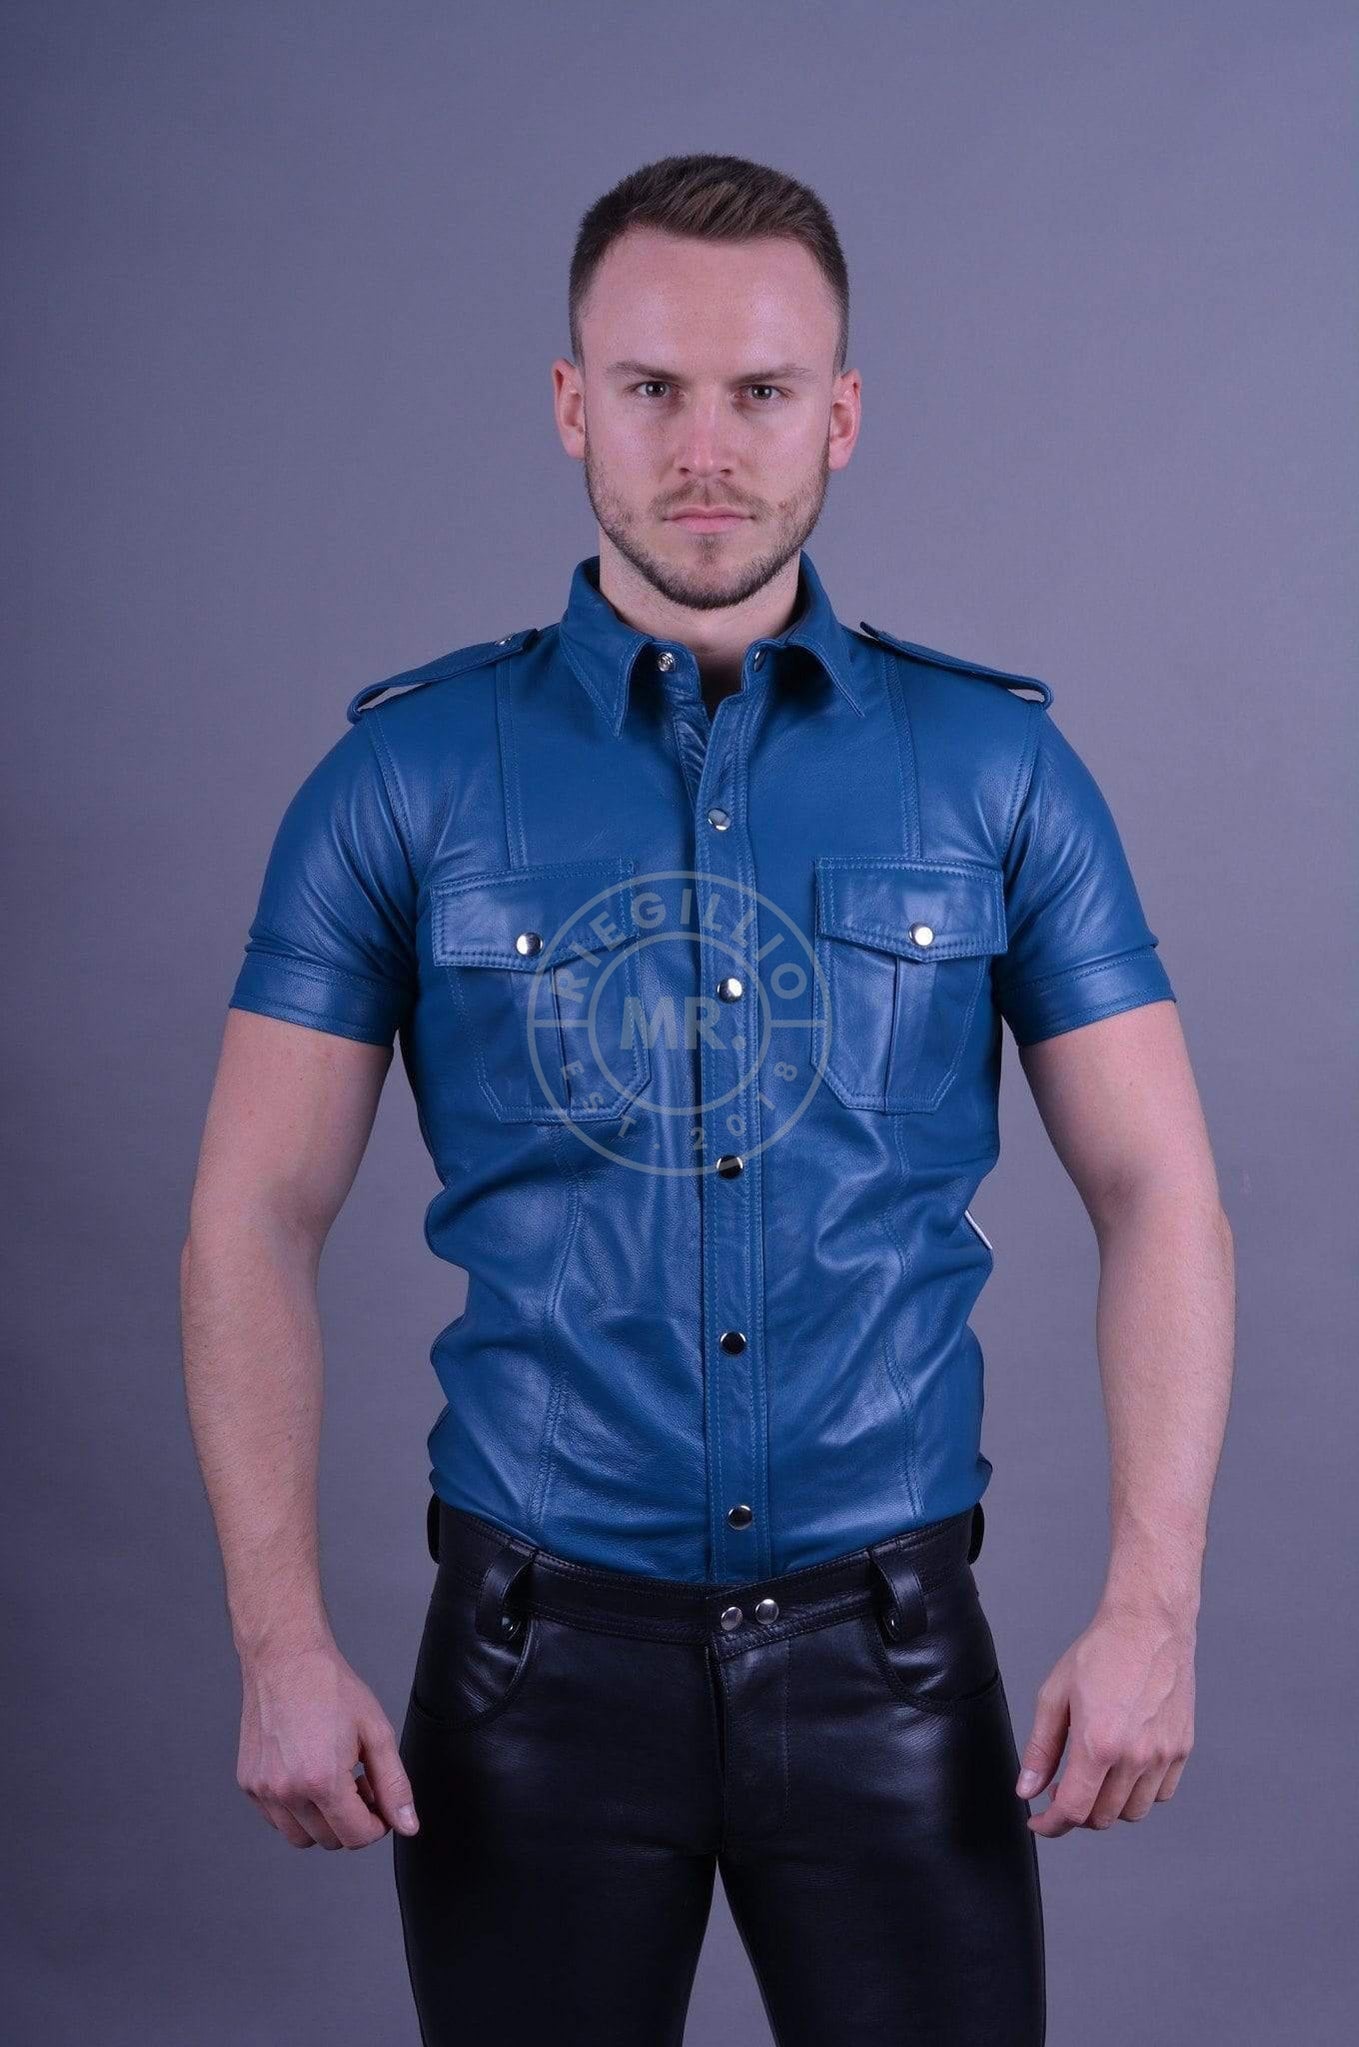 Jeans Blue Leather Shirt-at MR. Riegillio